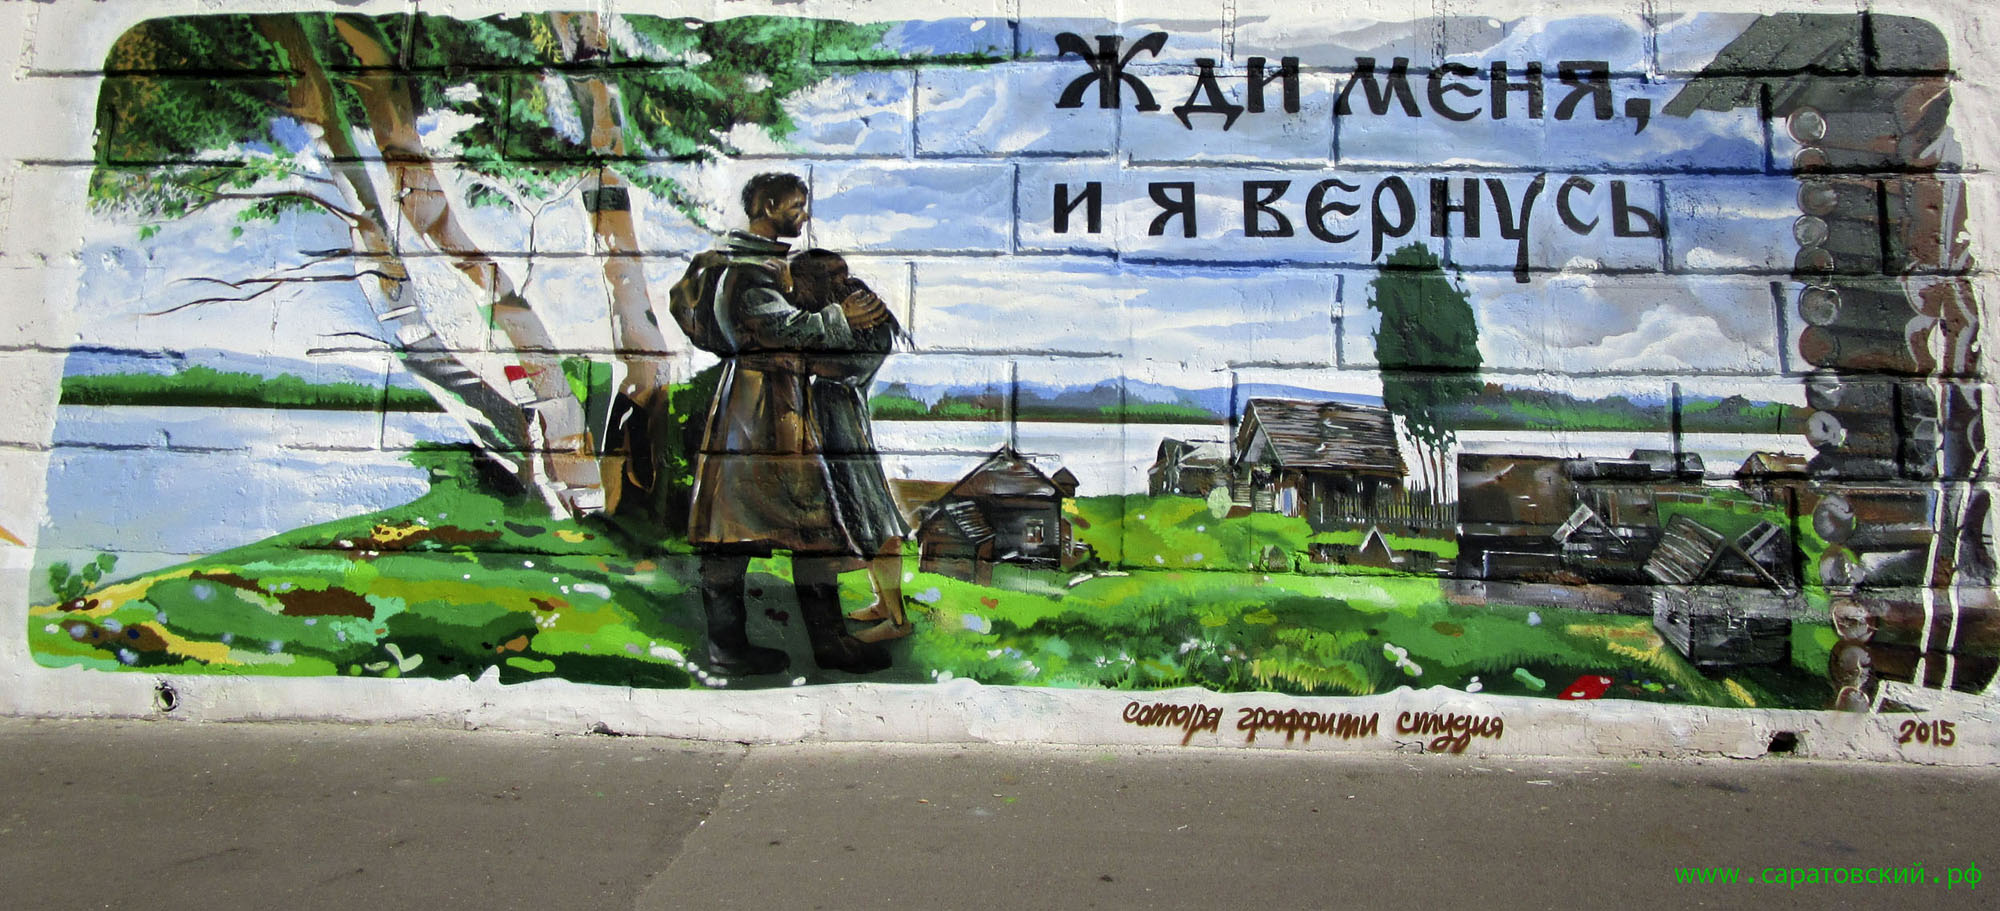 Saratov quayside graffiti: Konstantin Simonov and Saratov for the Russian victory in the Second World War